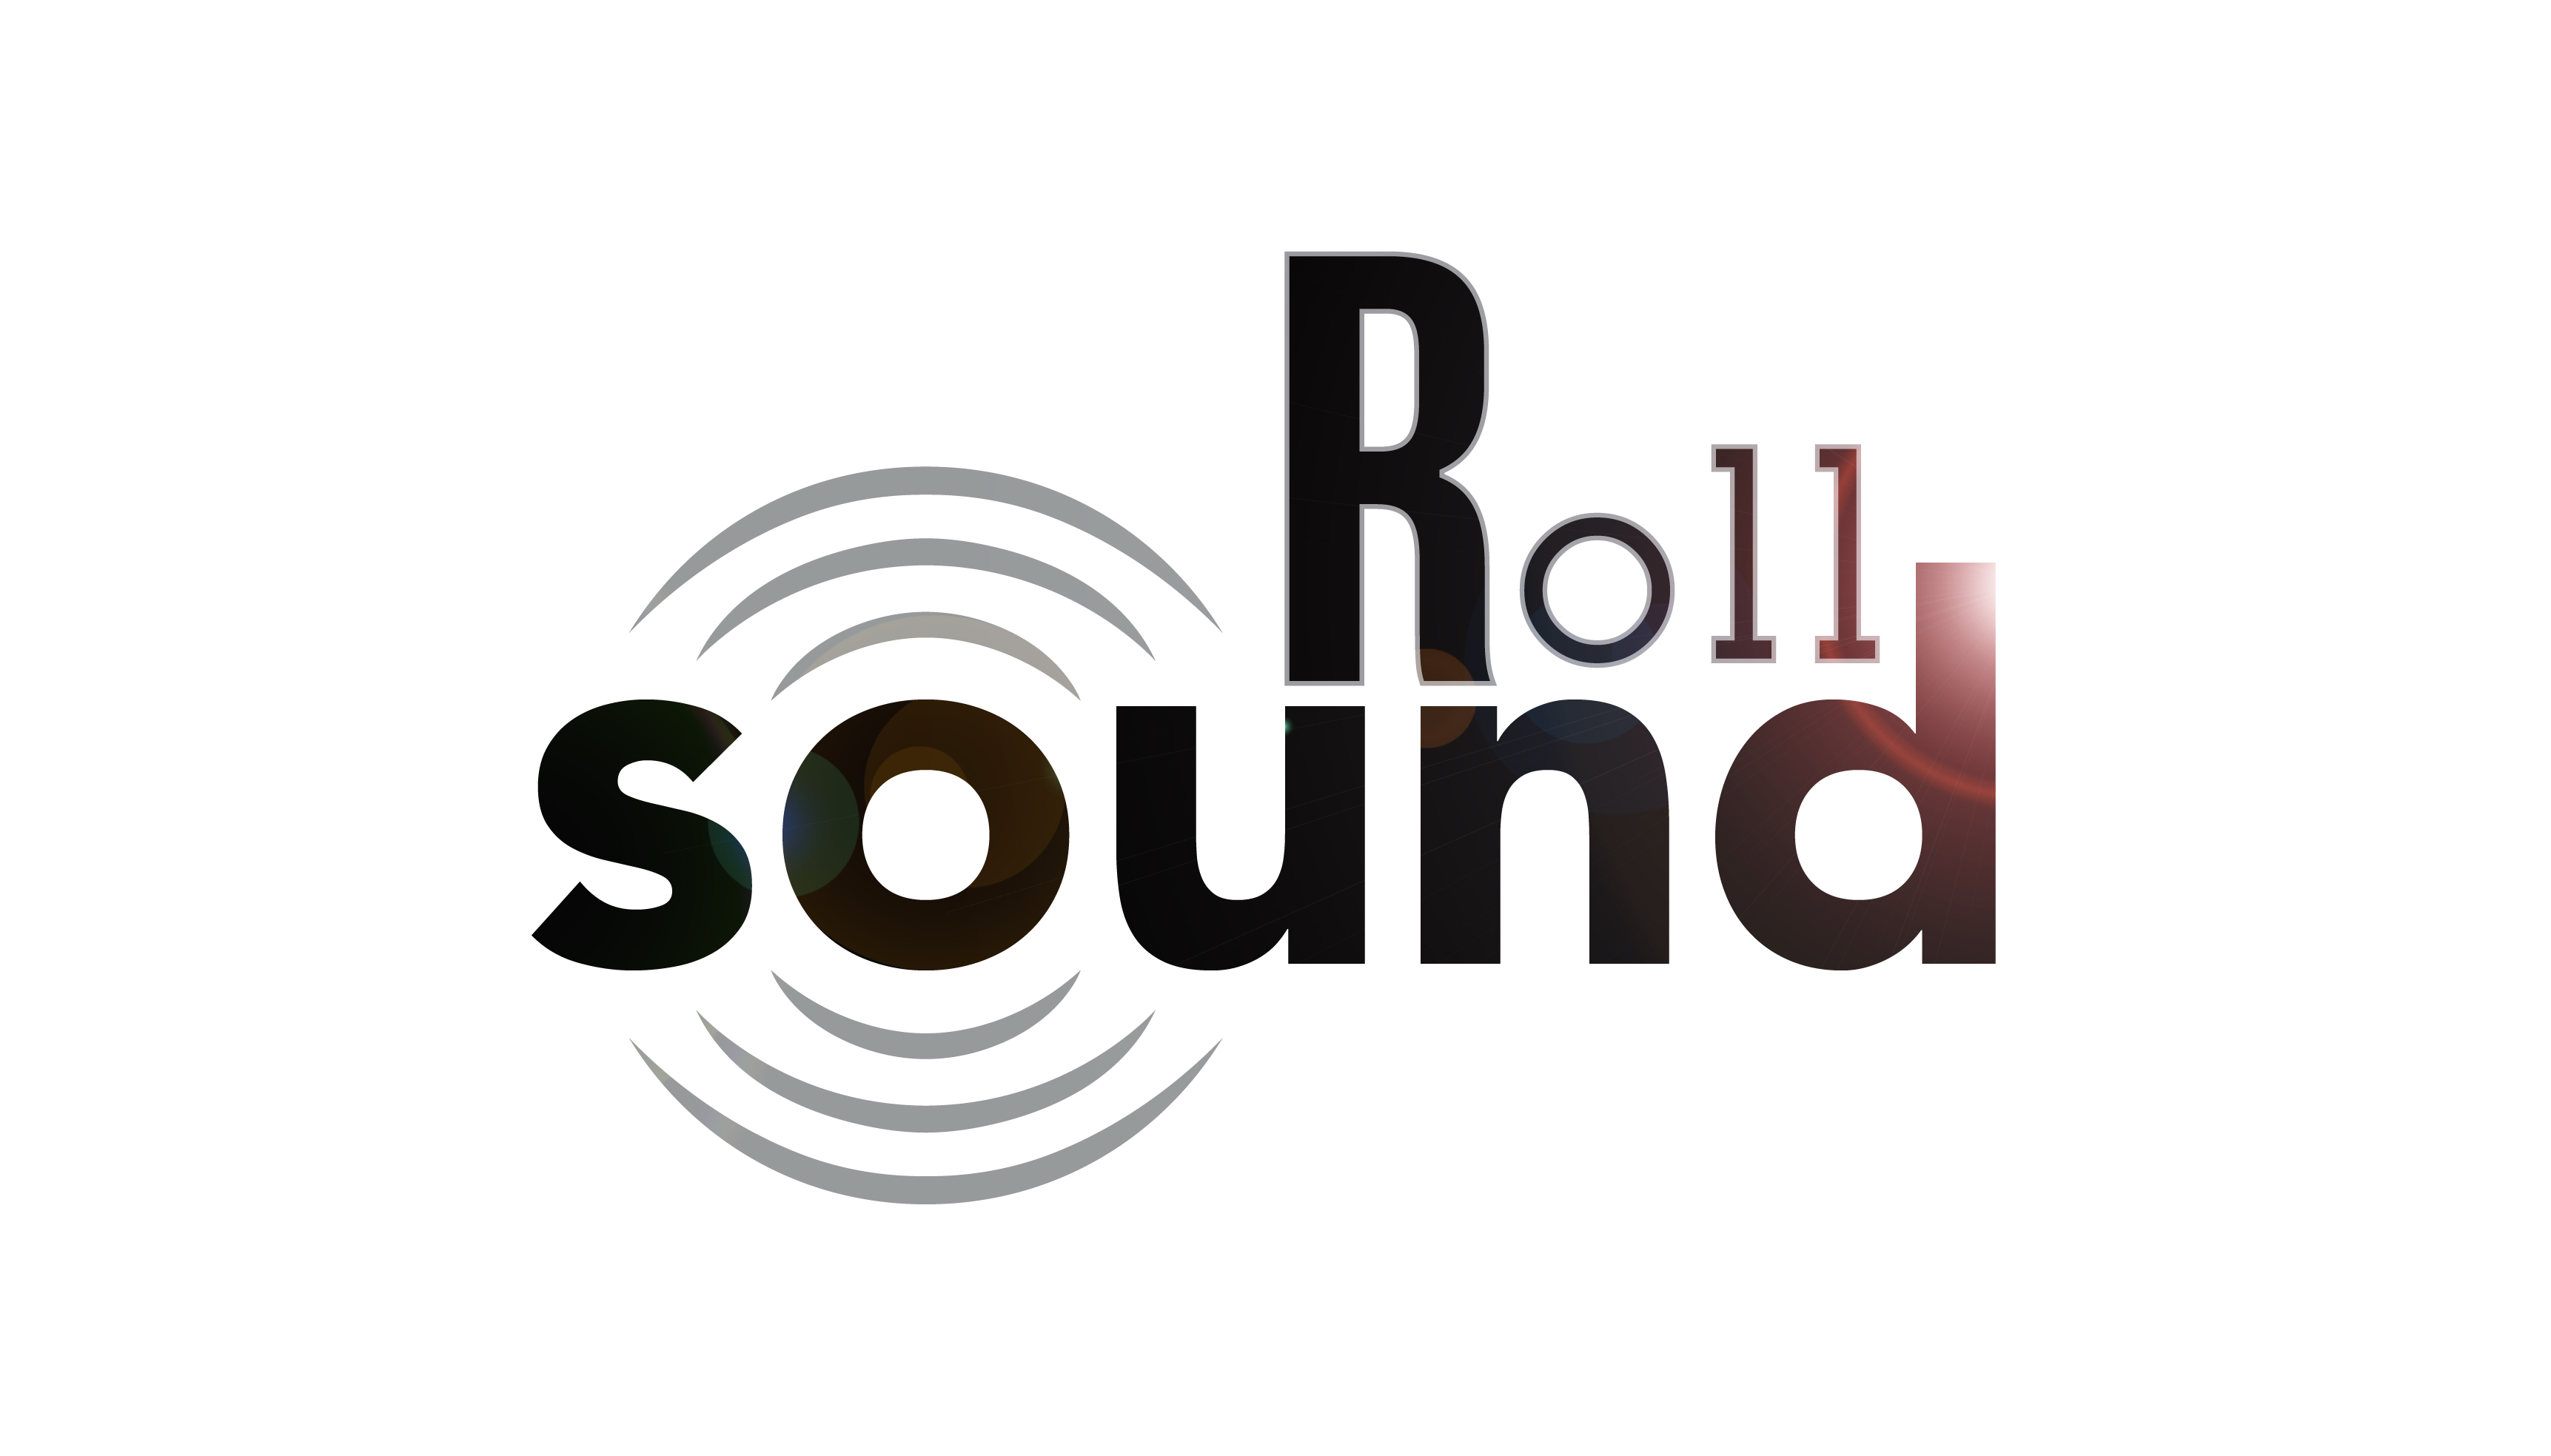 Roll Sound